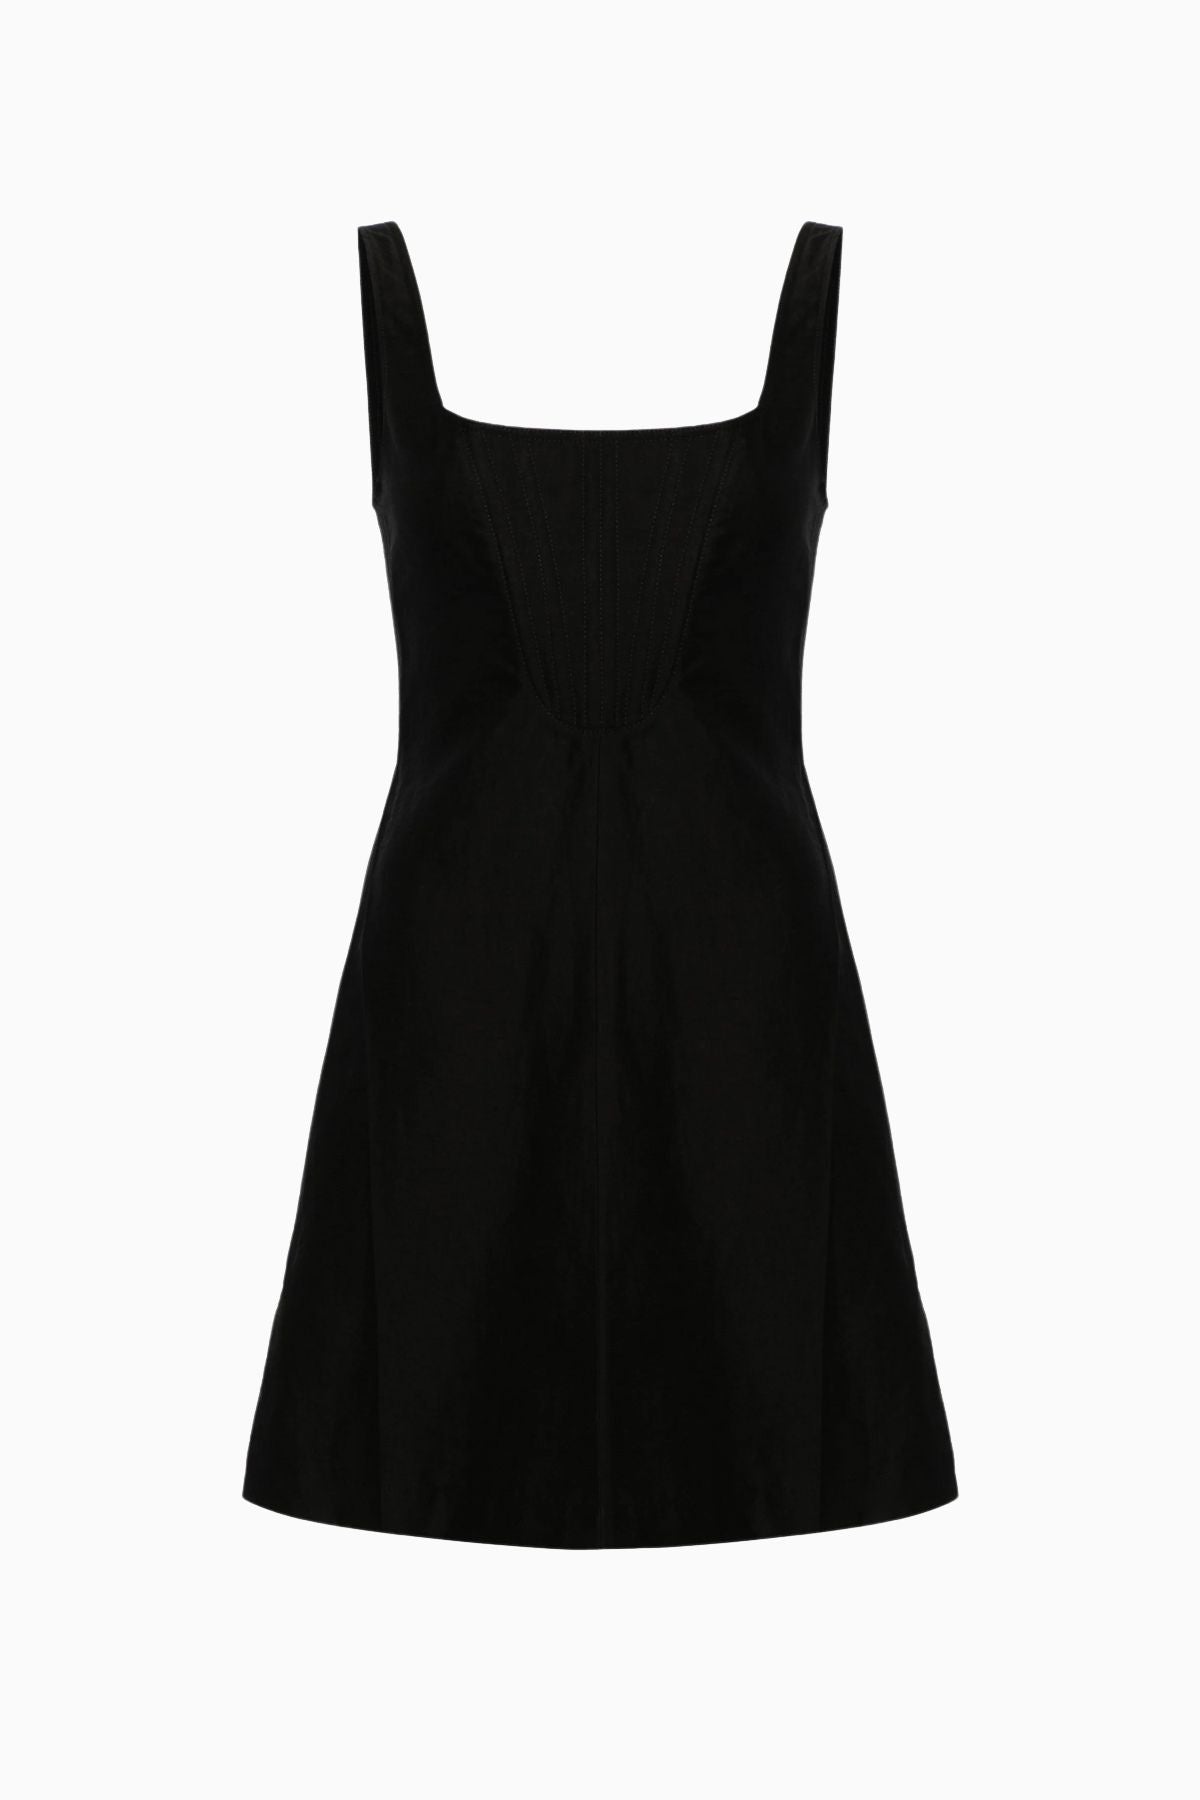 Stella McCartney Corset Mini Dress - Black